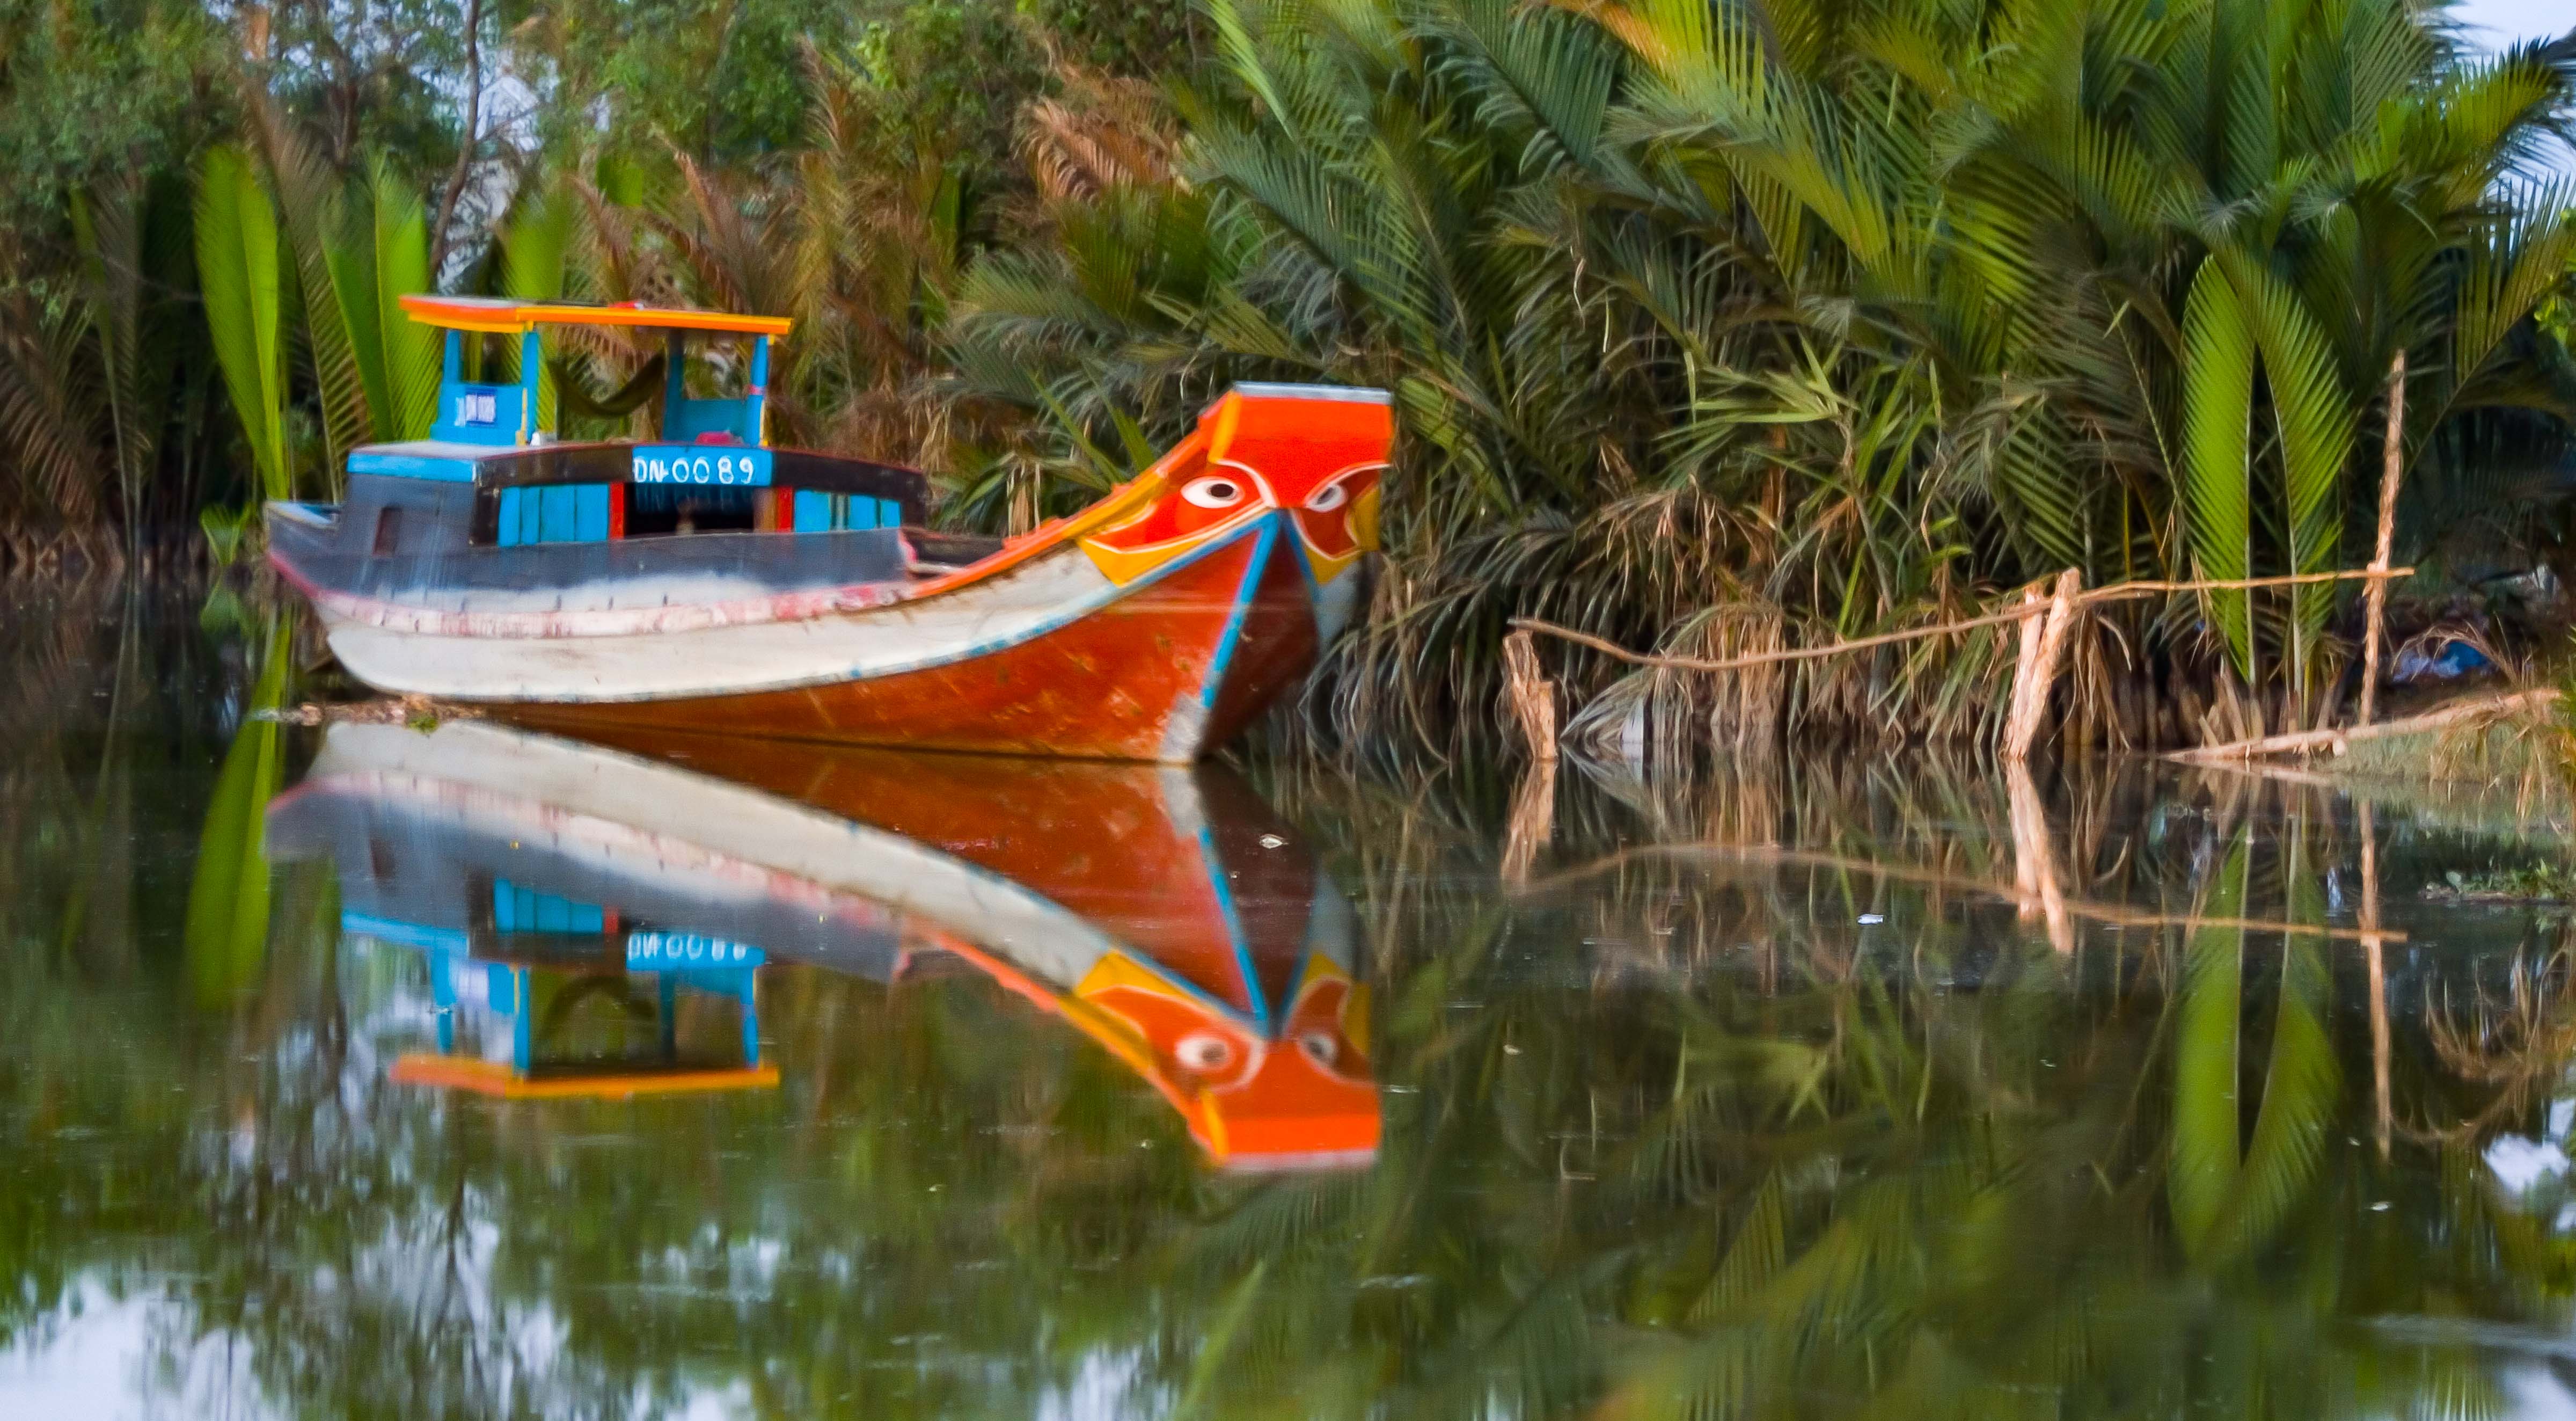 Vietnam, Dong Nai, Boat In Pond, 2010, IMG 0709